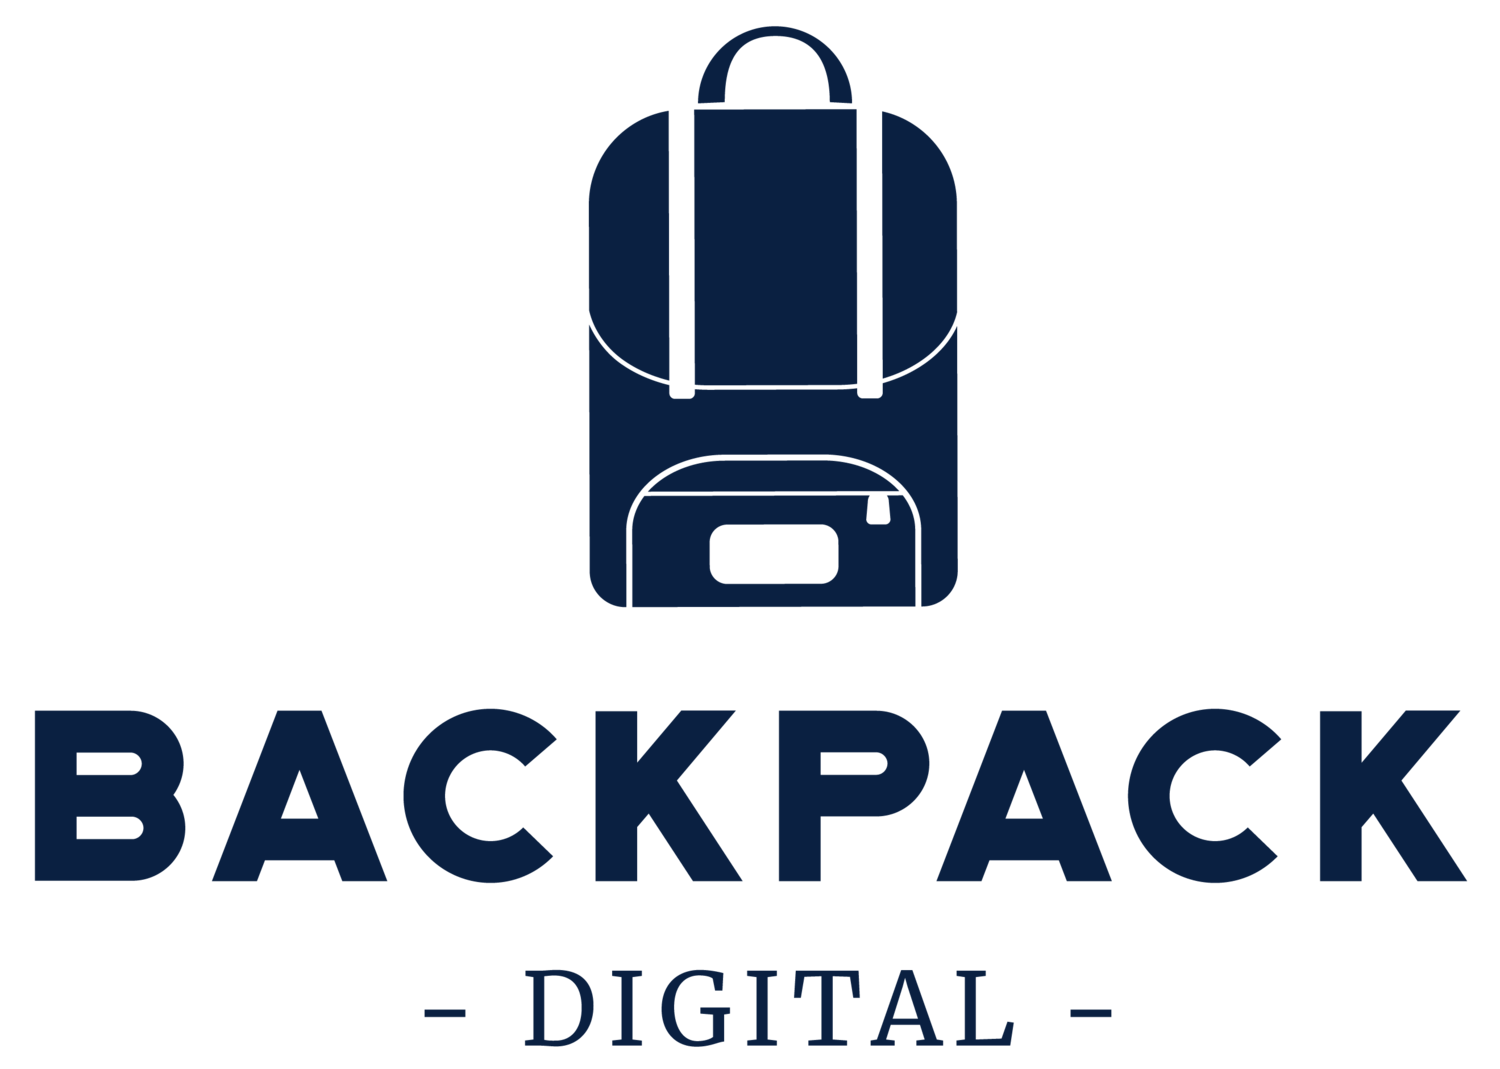 Backpack Digital